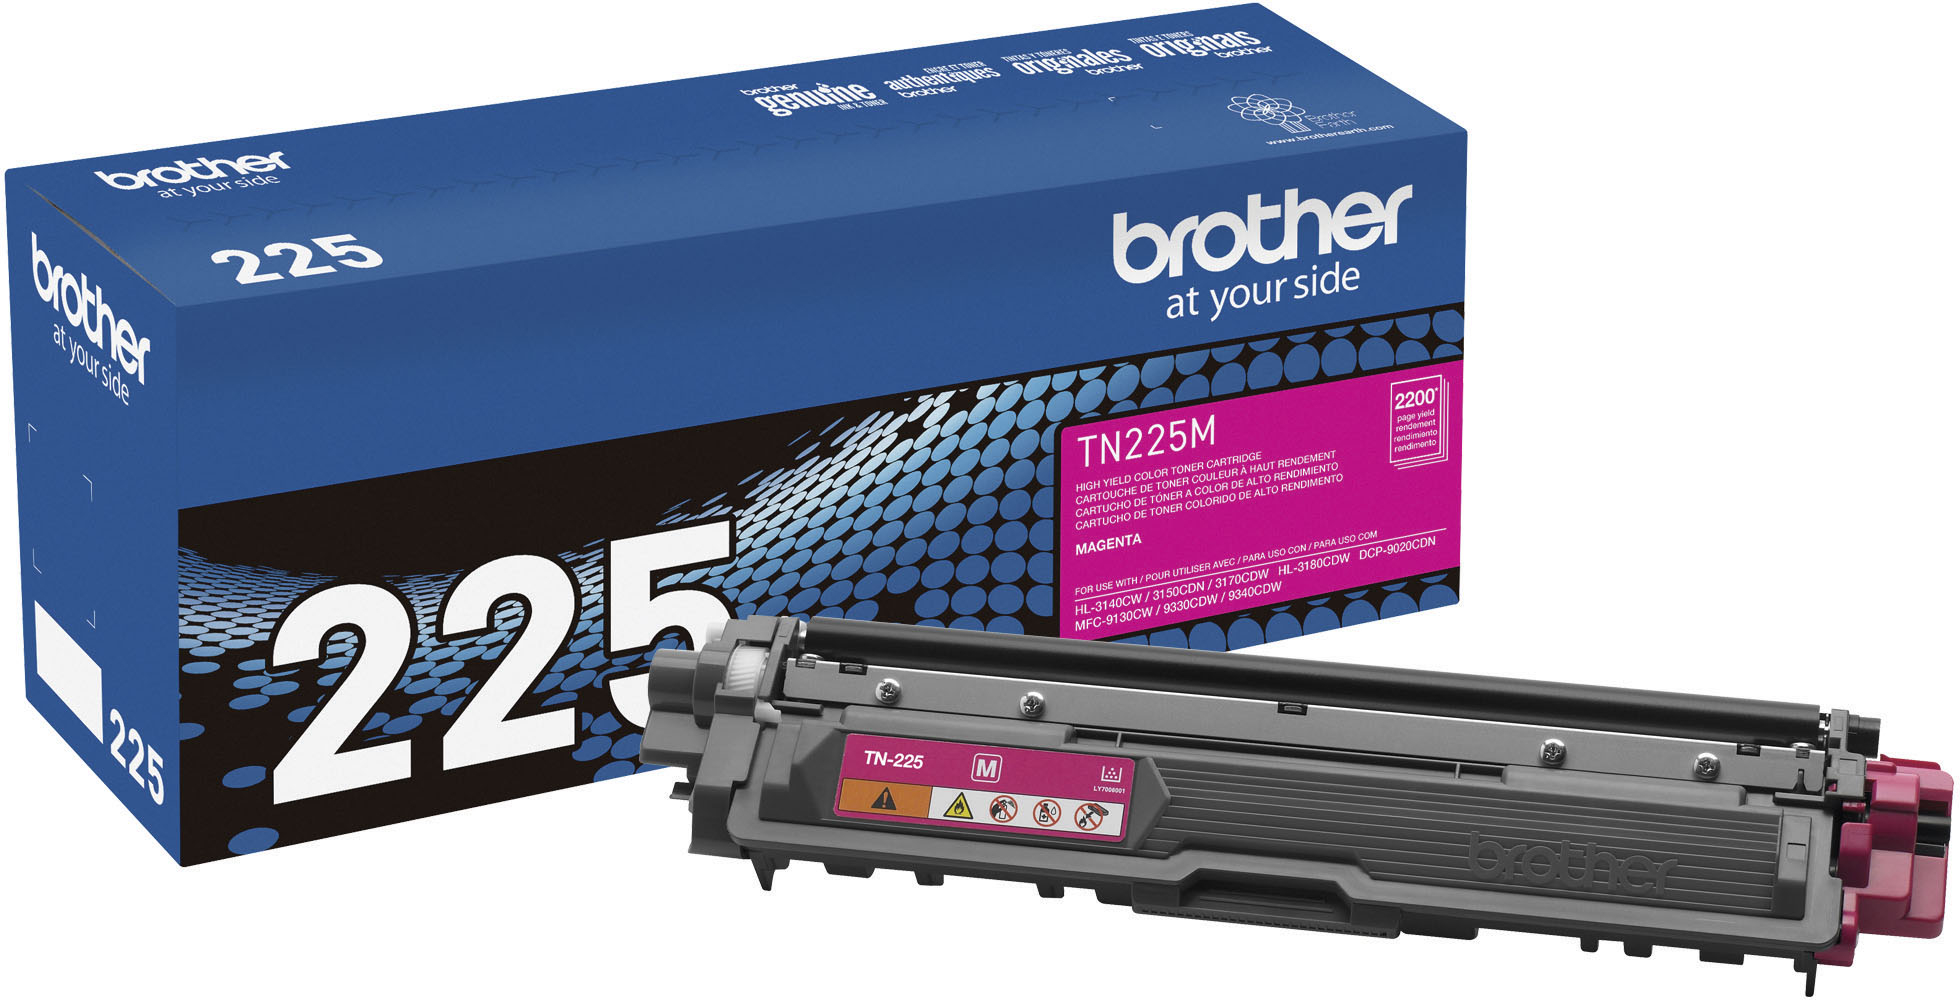 Brother - TN225M High-Yield Toner Cartridge - Magenta